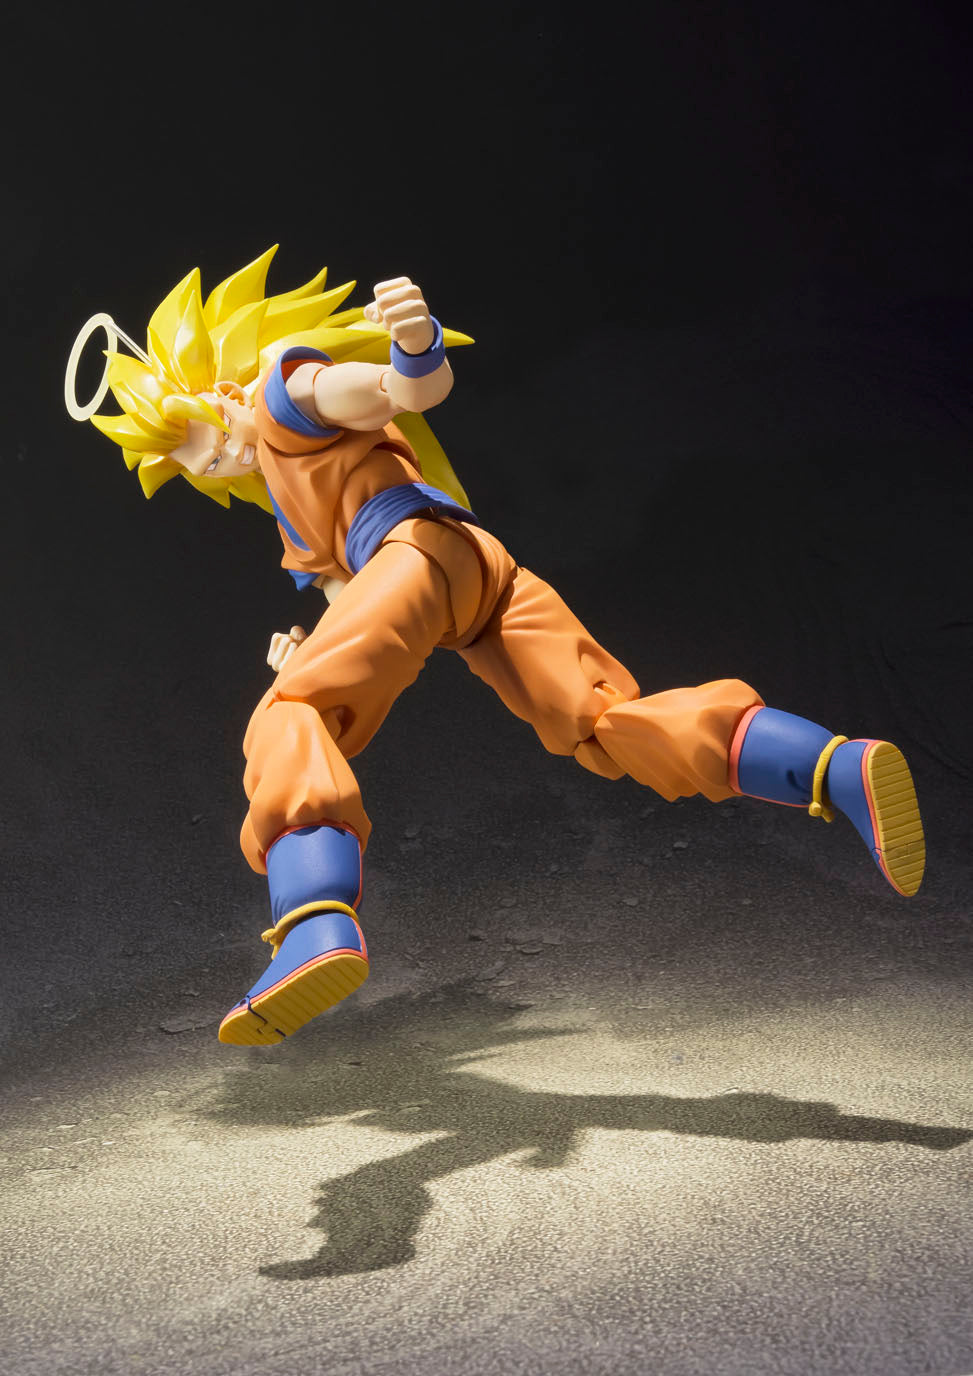 Super Saiyan 3 Goku "DRAGON BALL Z", TAMASHII NATIONS S.H.Figuarts flying pose